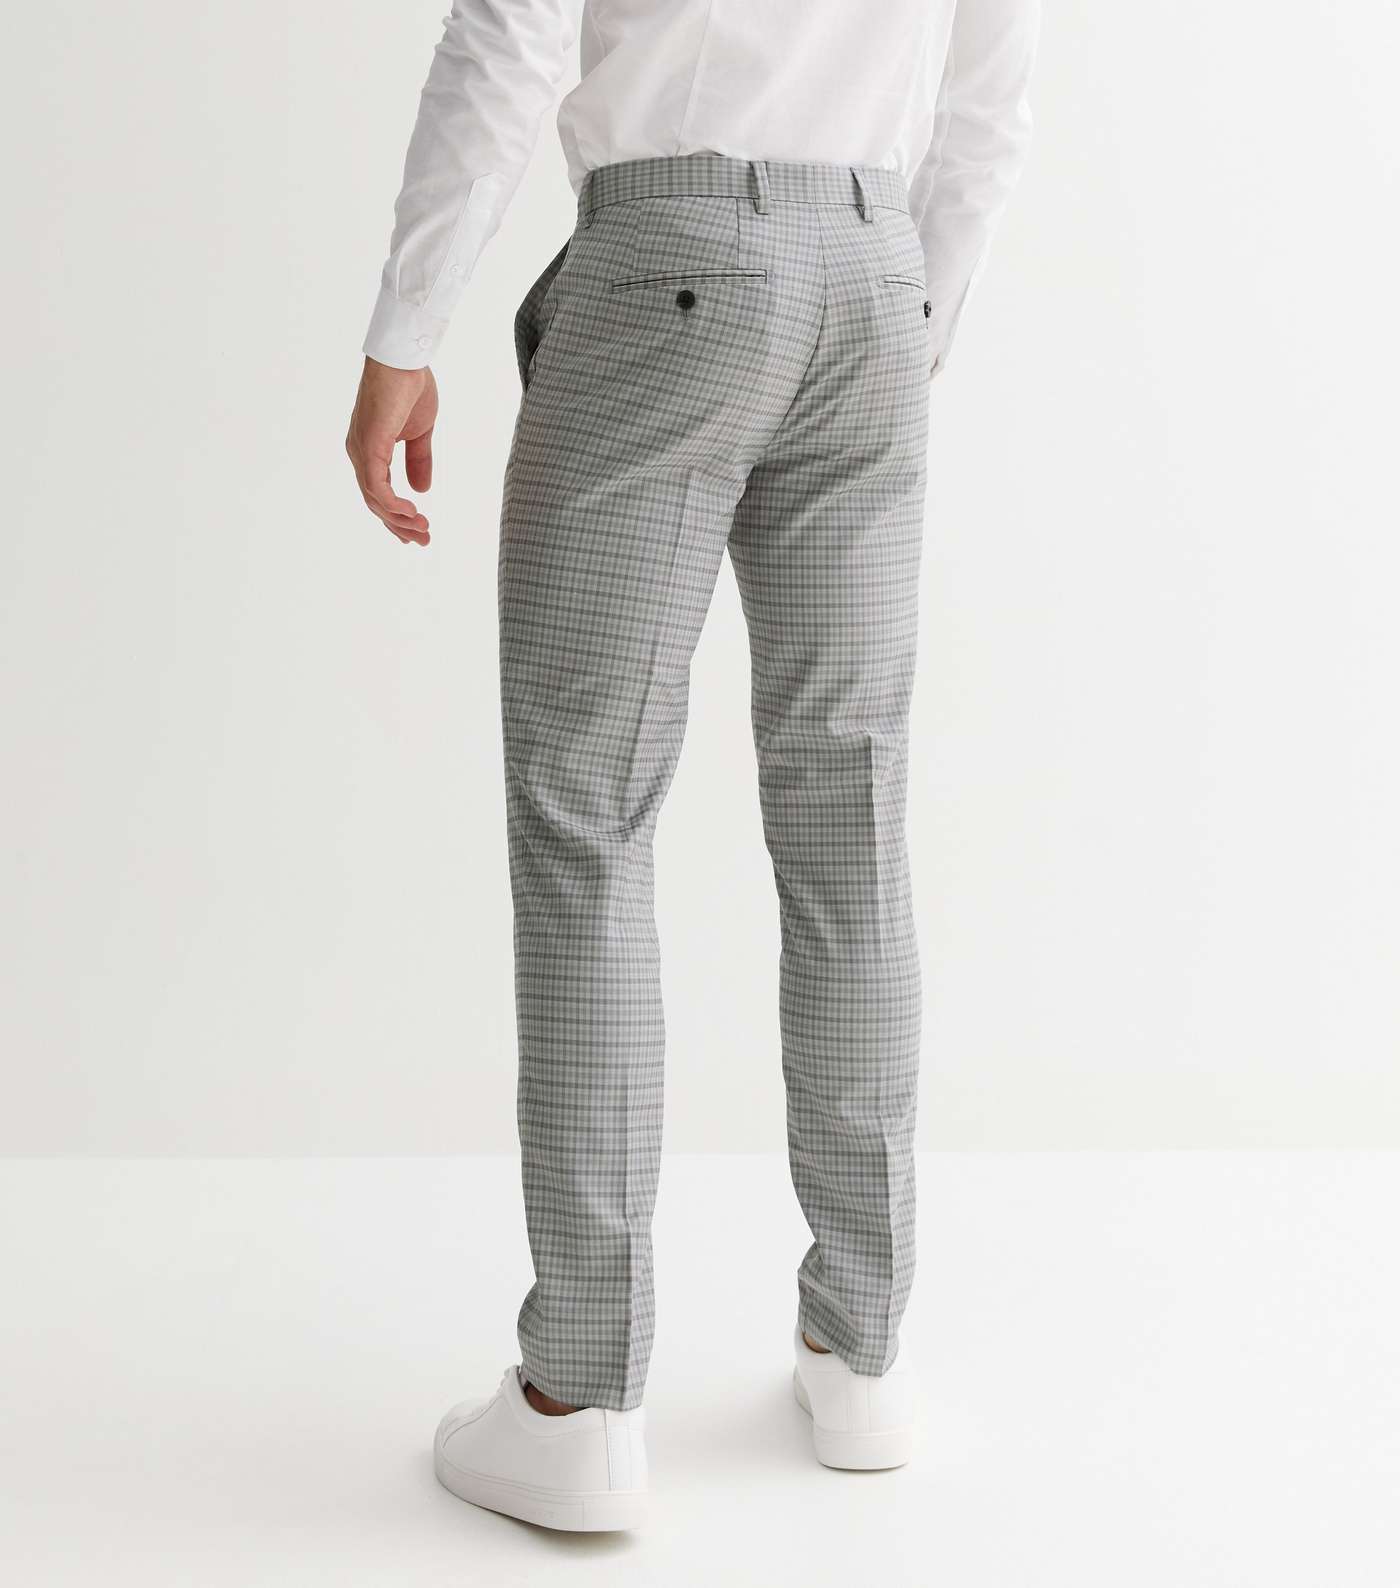 Jack & Jones Pale Grey Check Trousers Image 4